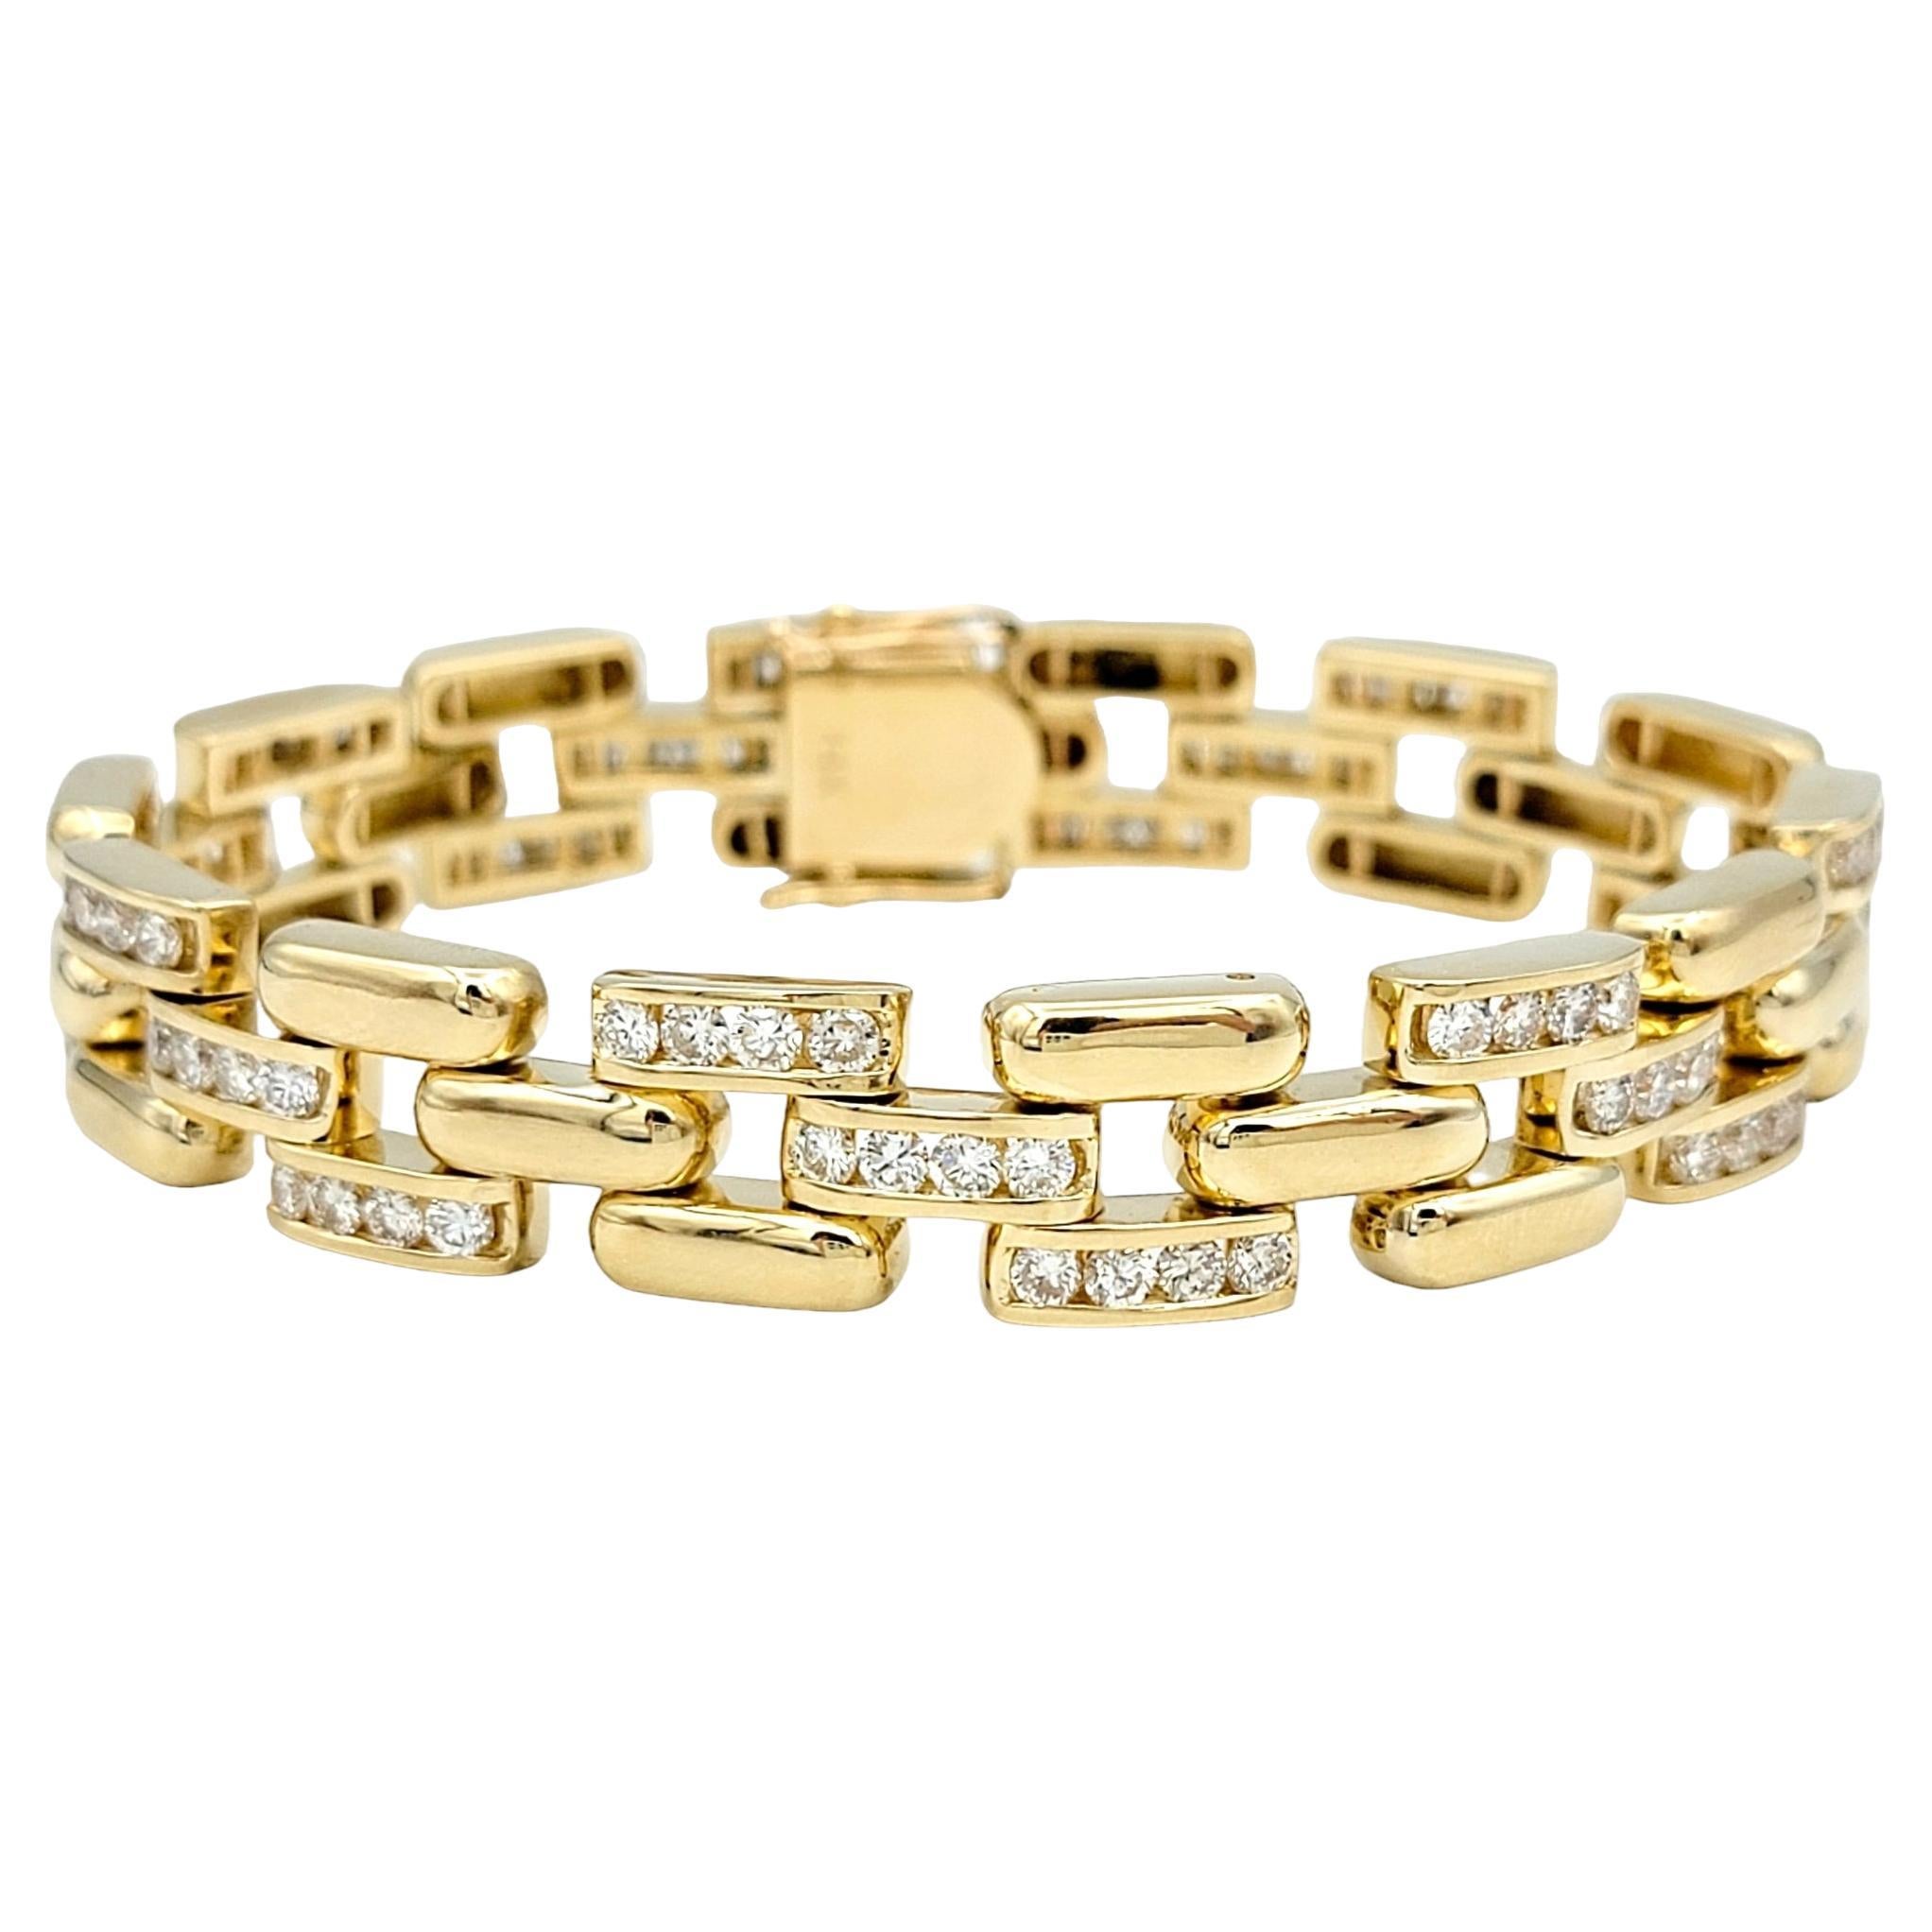 4.50 Carat Total Round Diamond Panther Link Bracelet Set in 14 Karat Yellow Gold For Sale